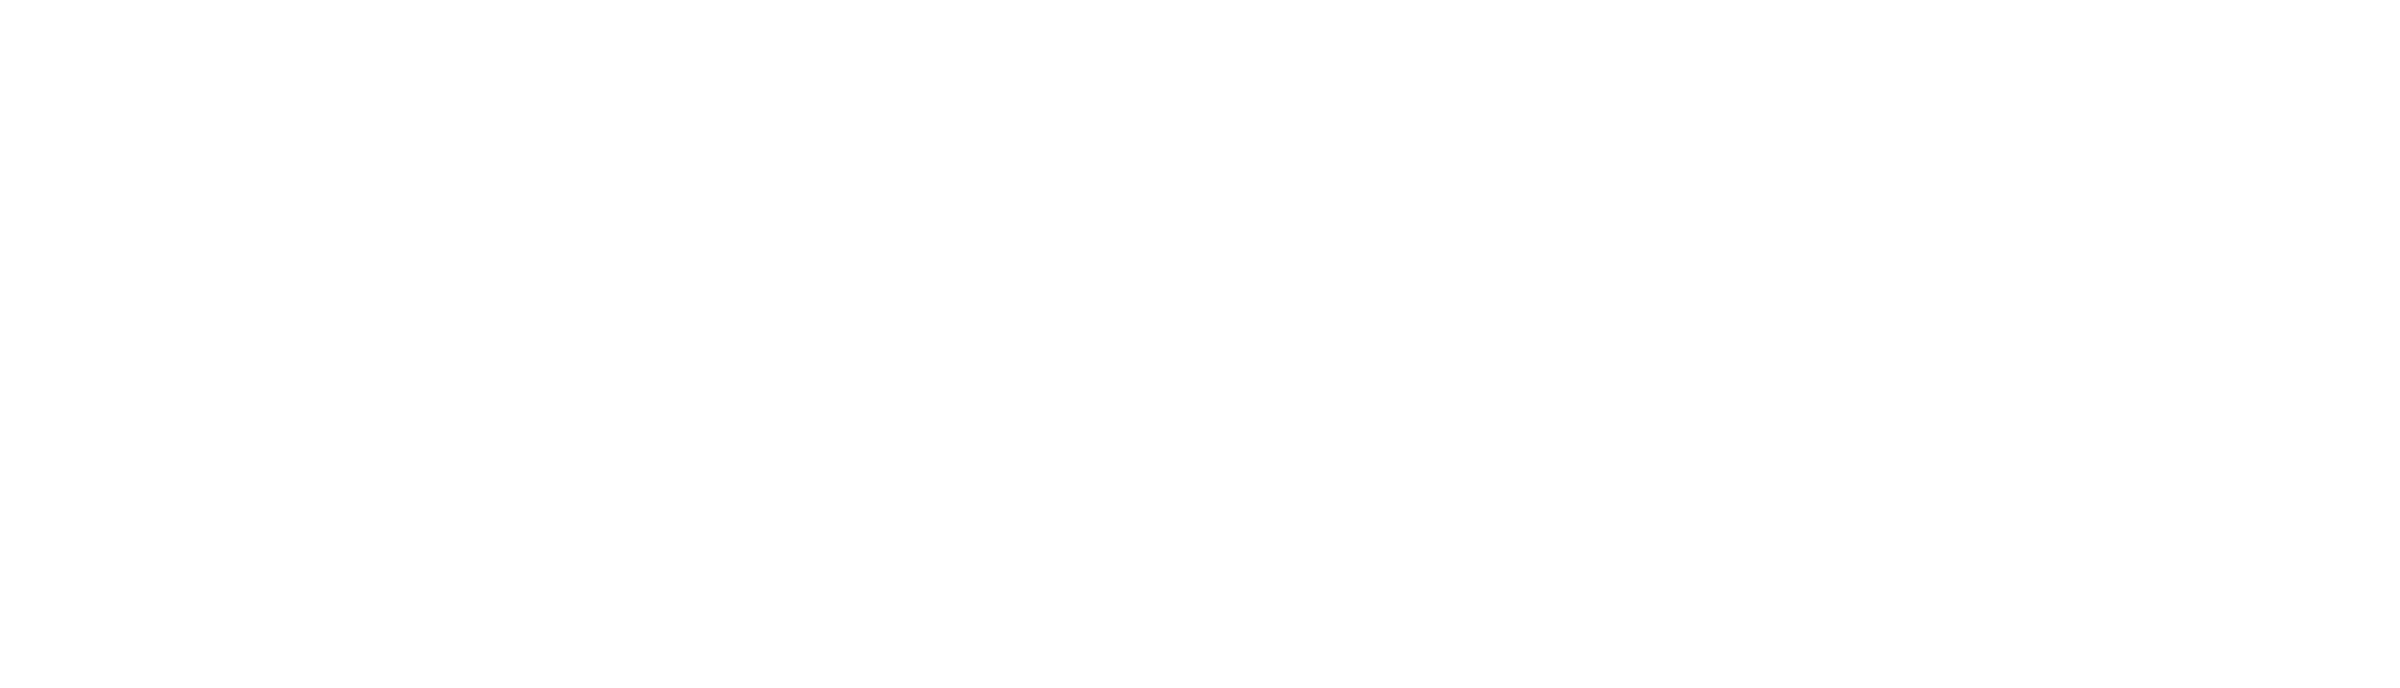 vimeo-logo-black-and-white